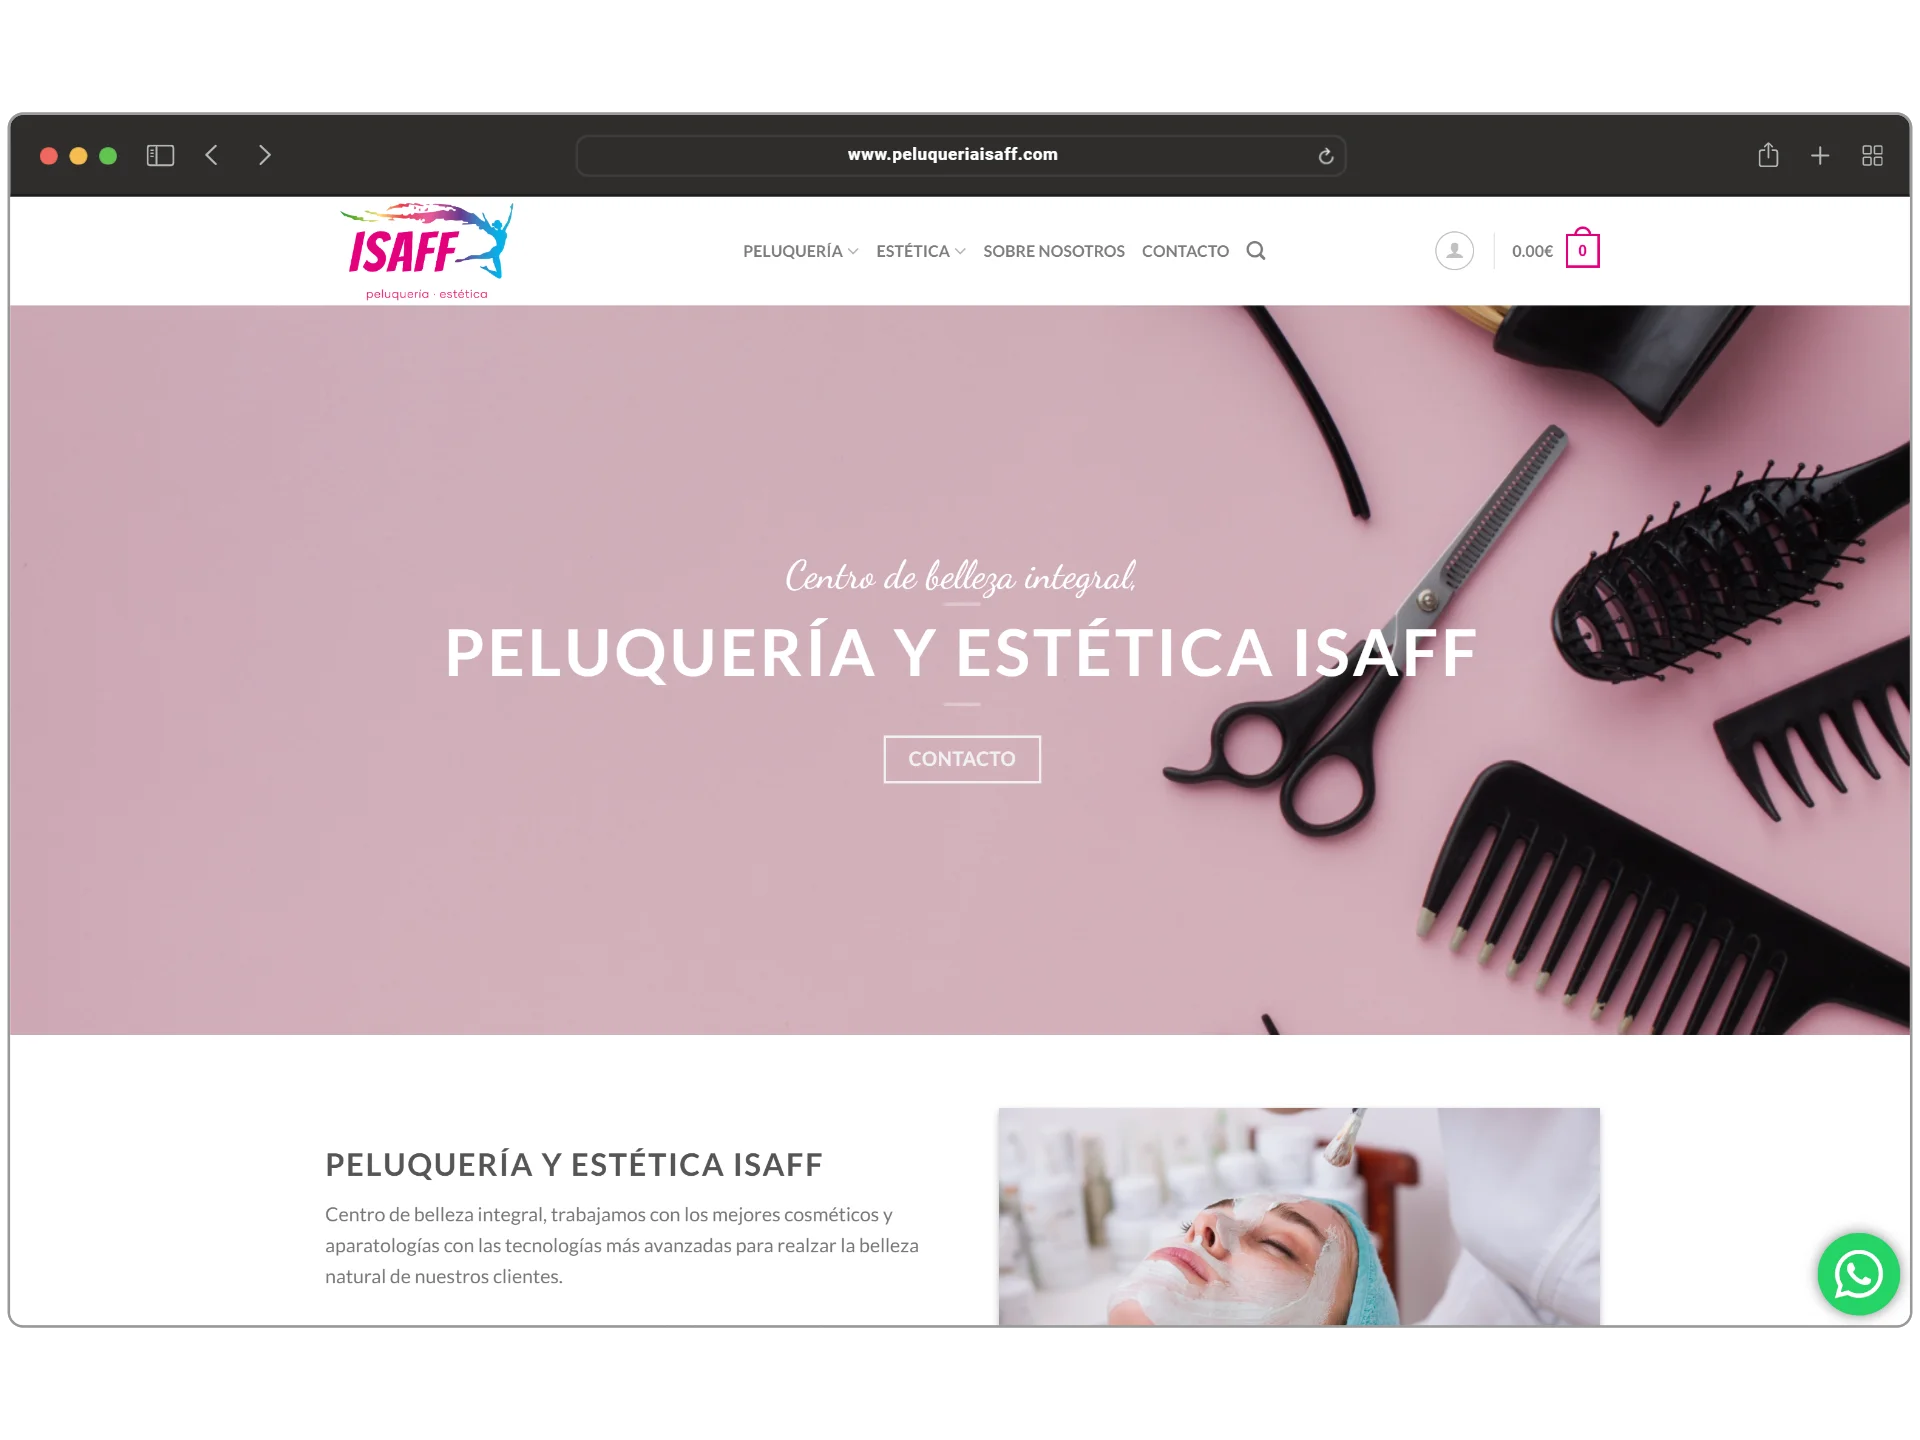 web design example for hairdressing salon